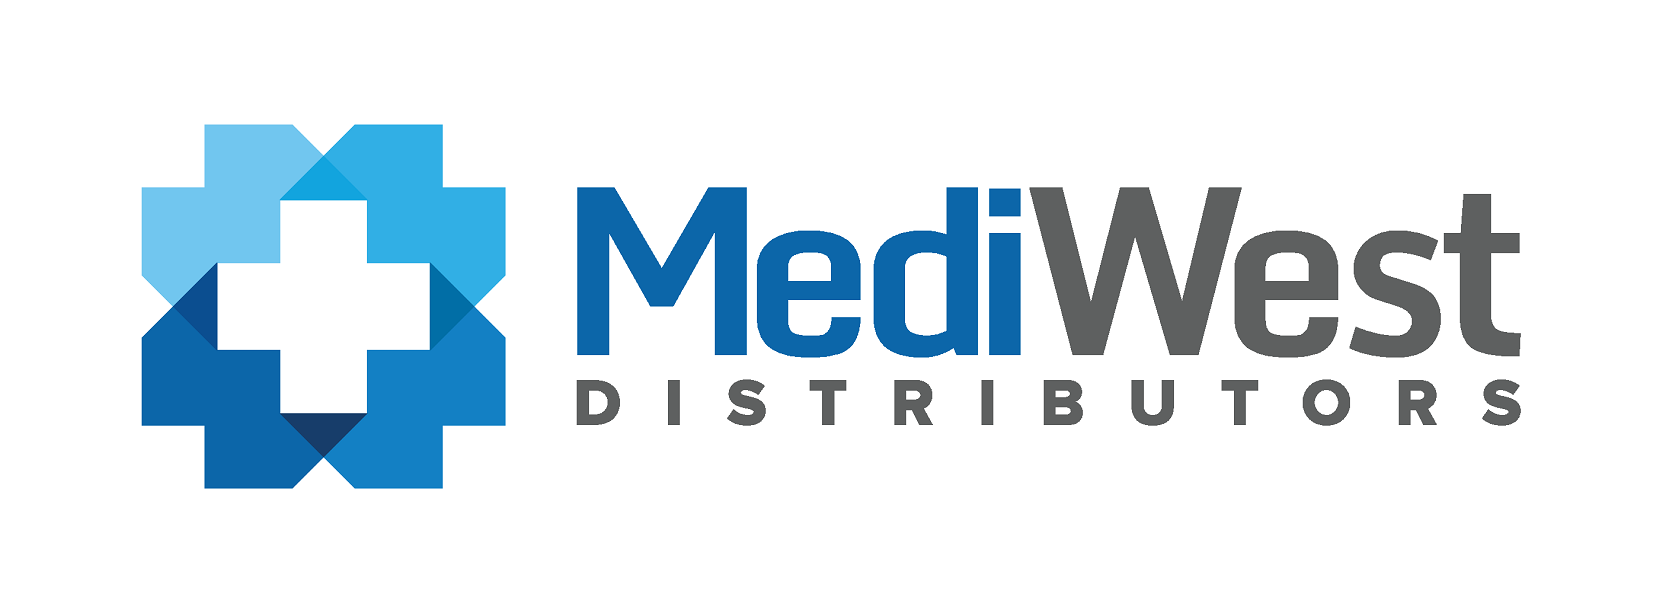 MediWest Distributors Logo